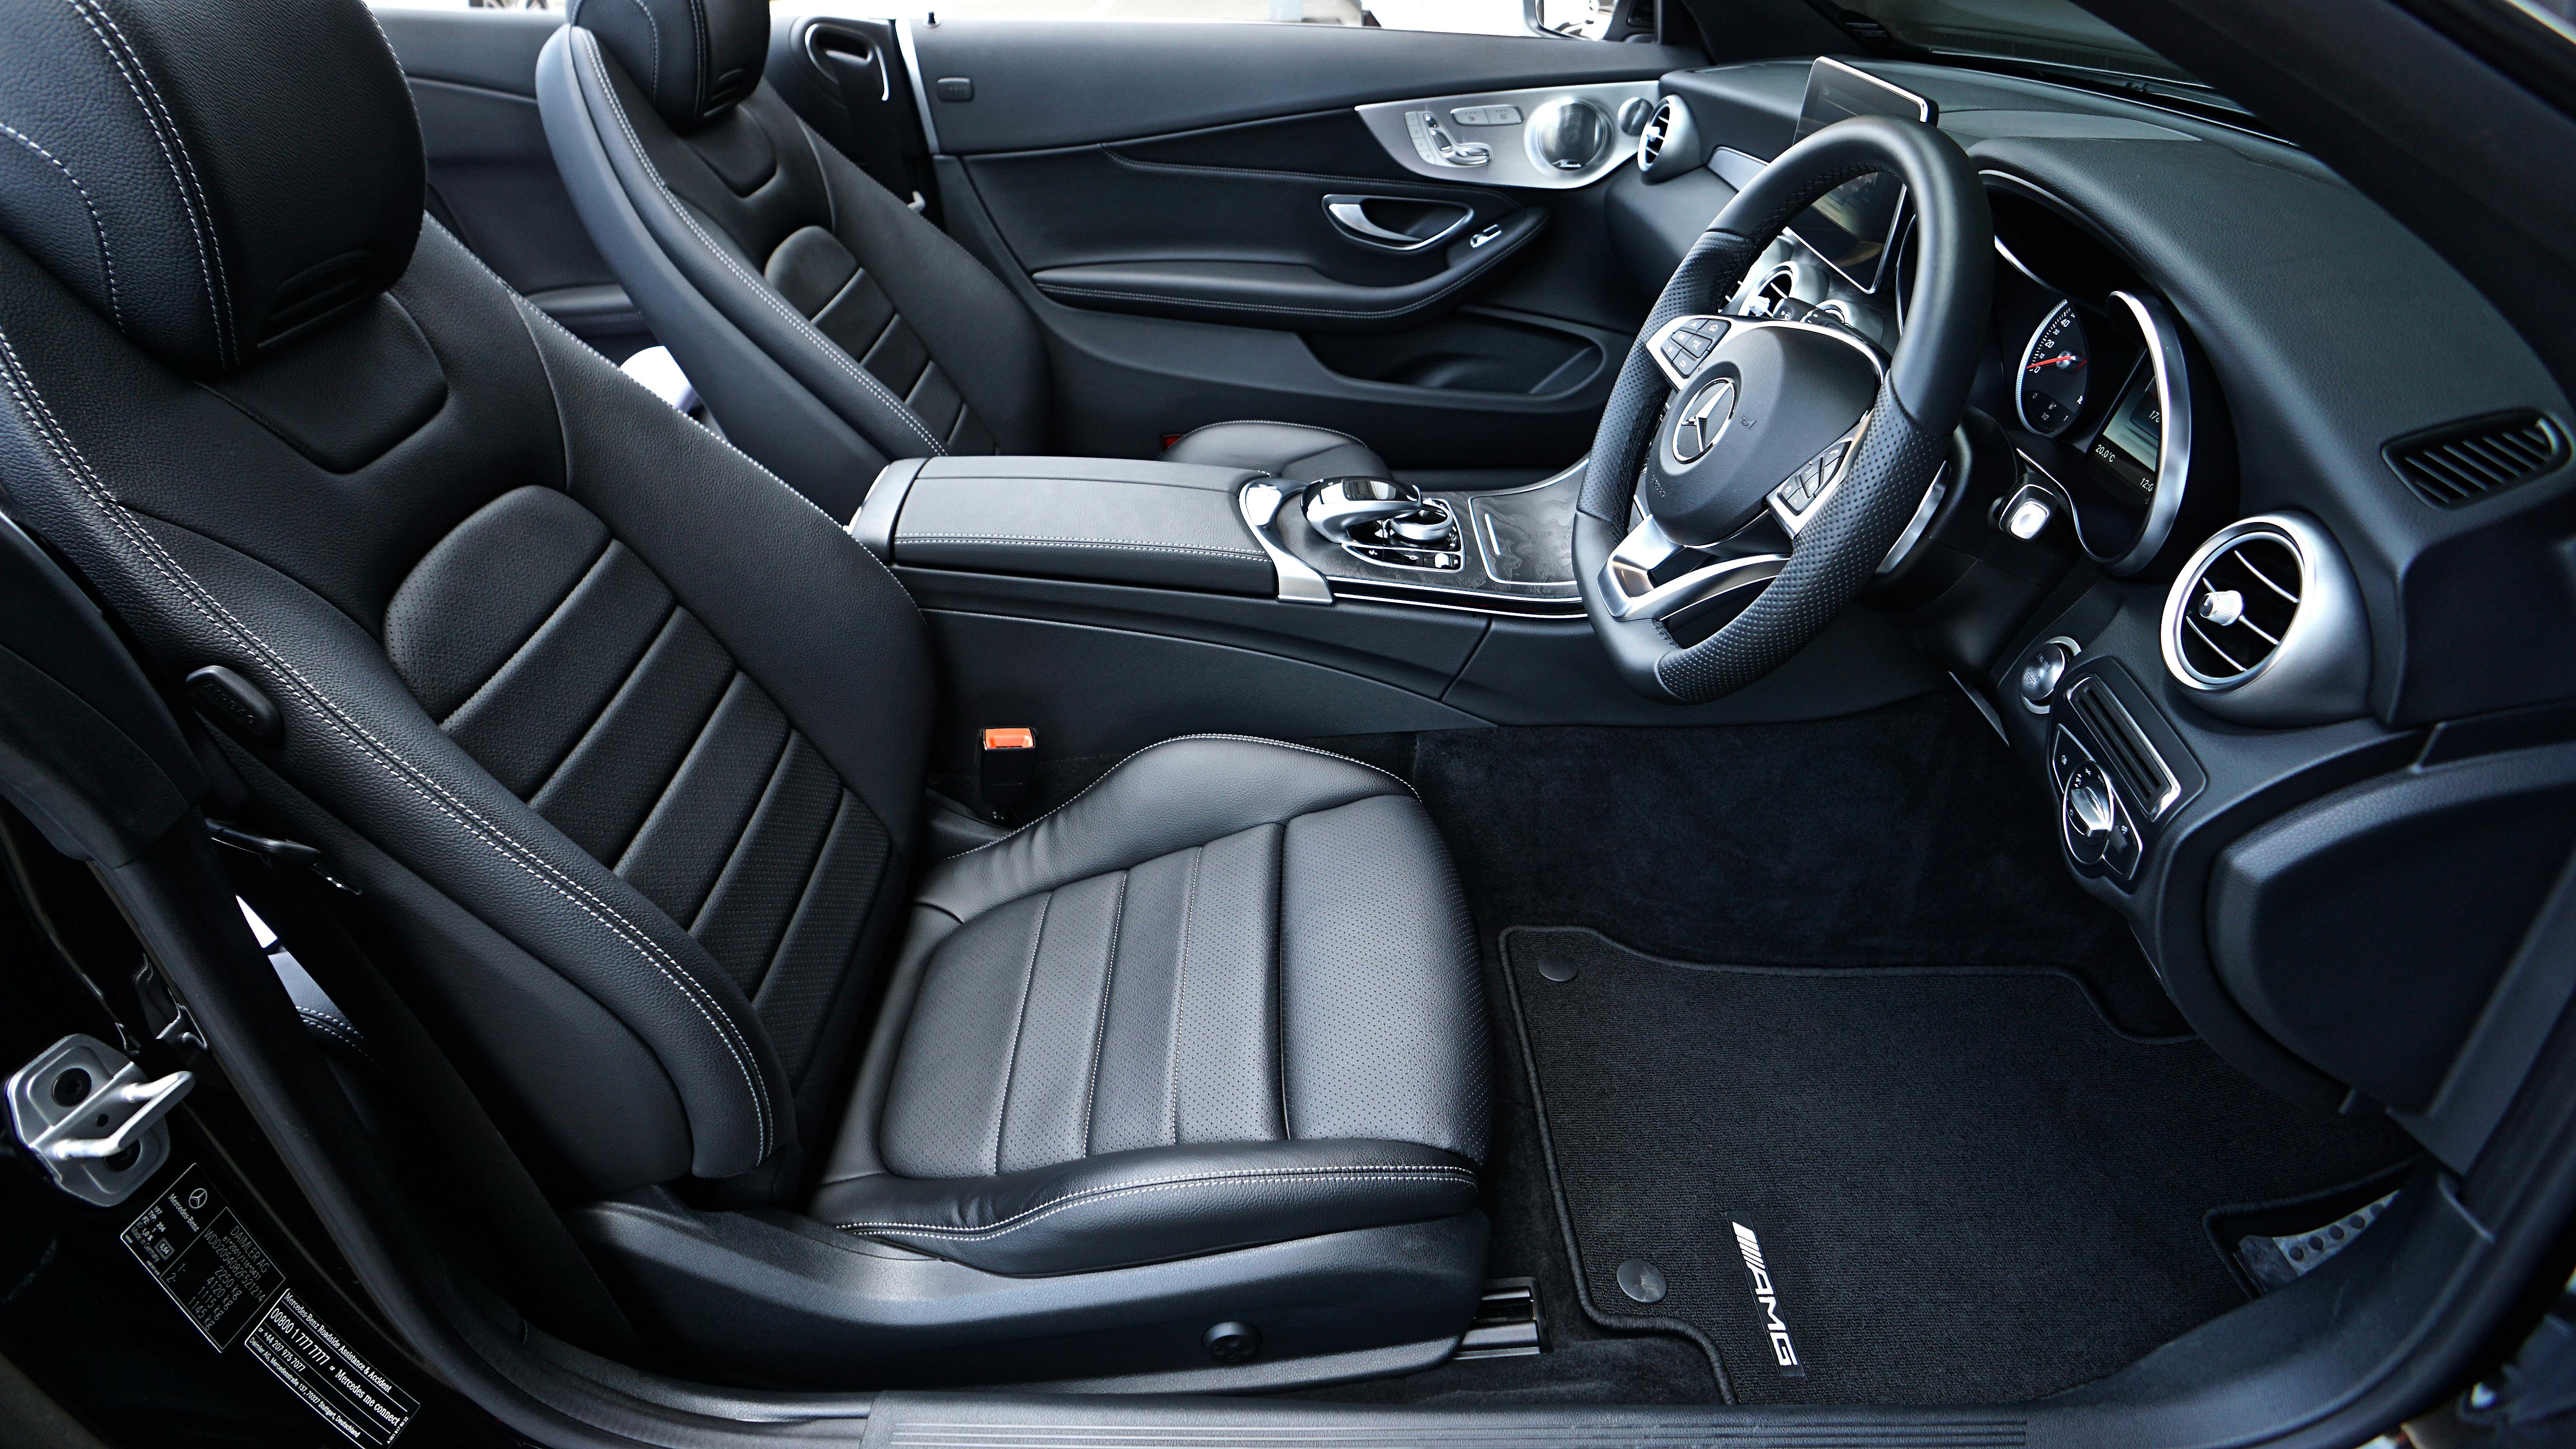 Mercedes-Benz Car Interior · Free Stock Photo